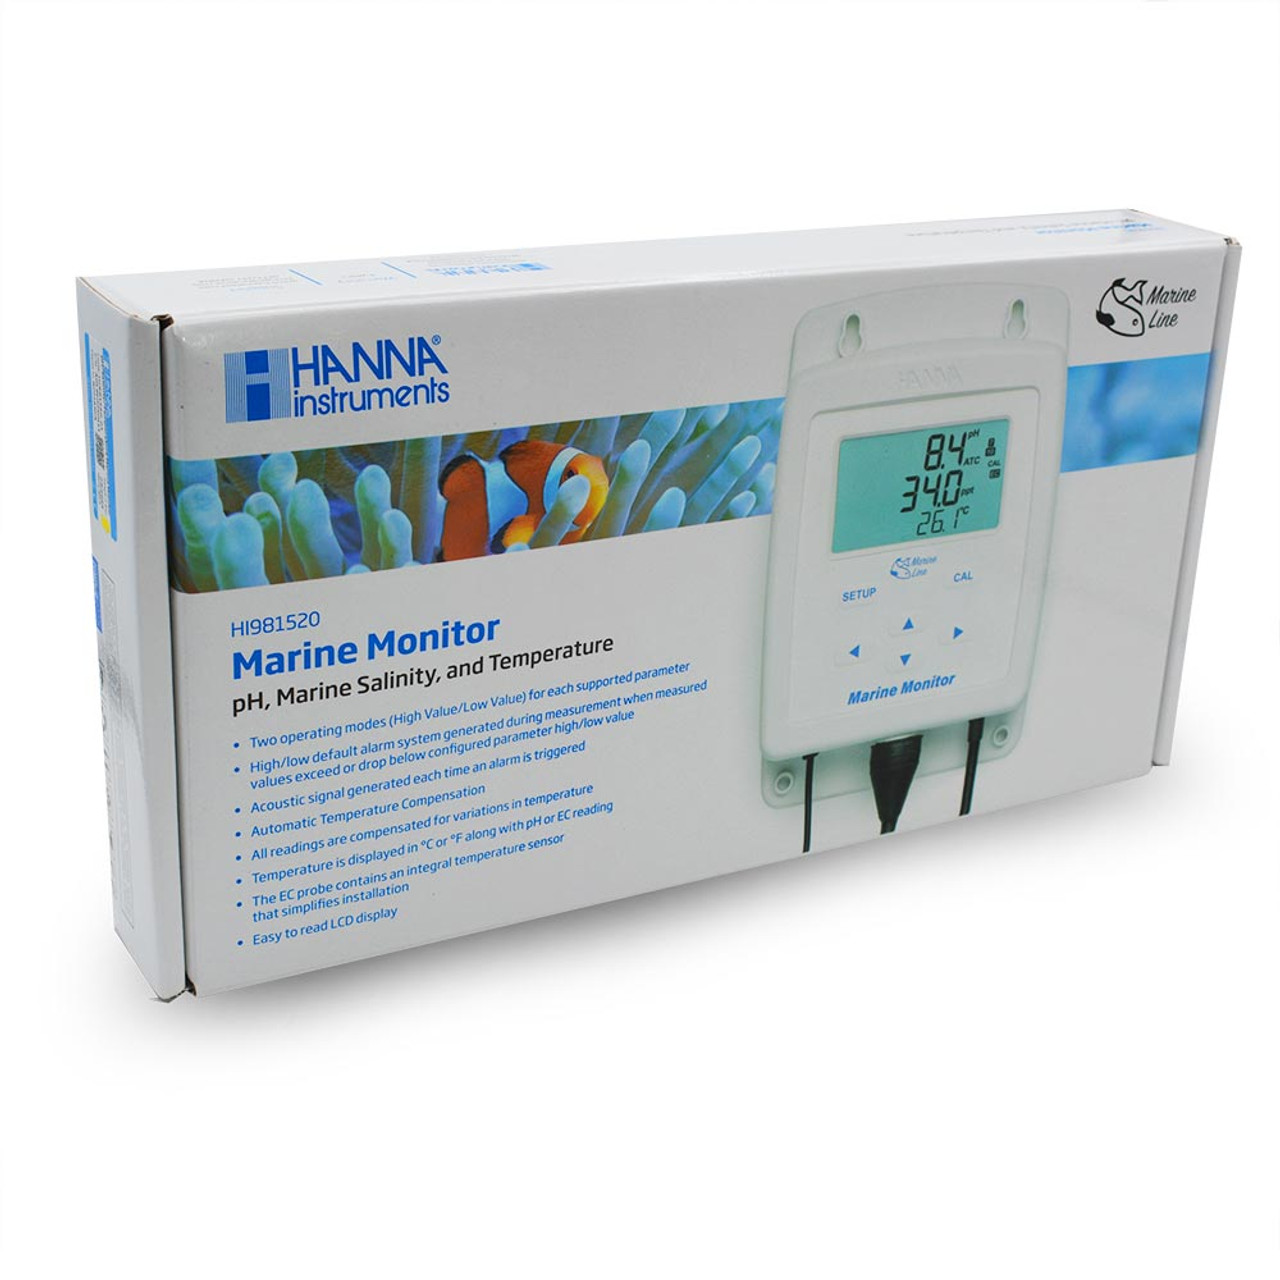 HI981520 Hanna Marine Monitor pH, Marine Salinity, Temperature 